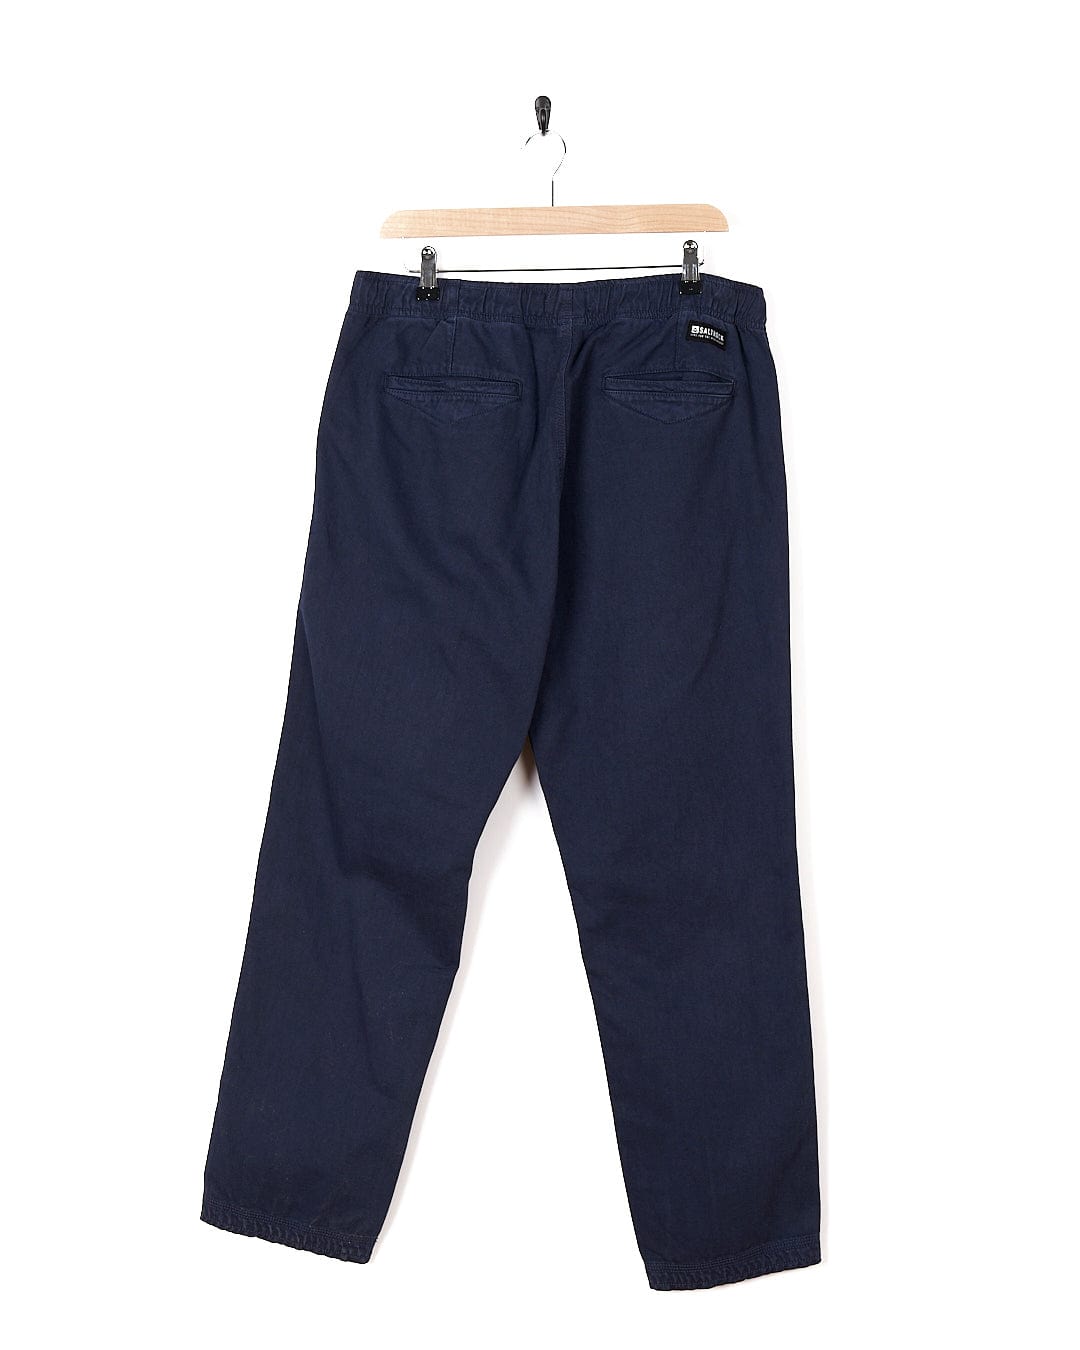 A pair of Saltrock Meddon - Mens Twill Trouser - Blue pants hanging on a hanger.